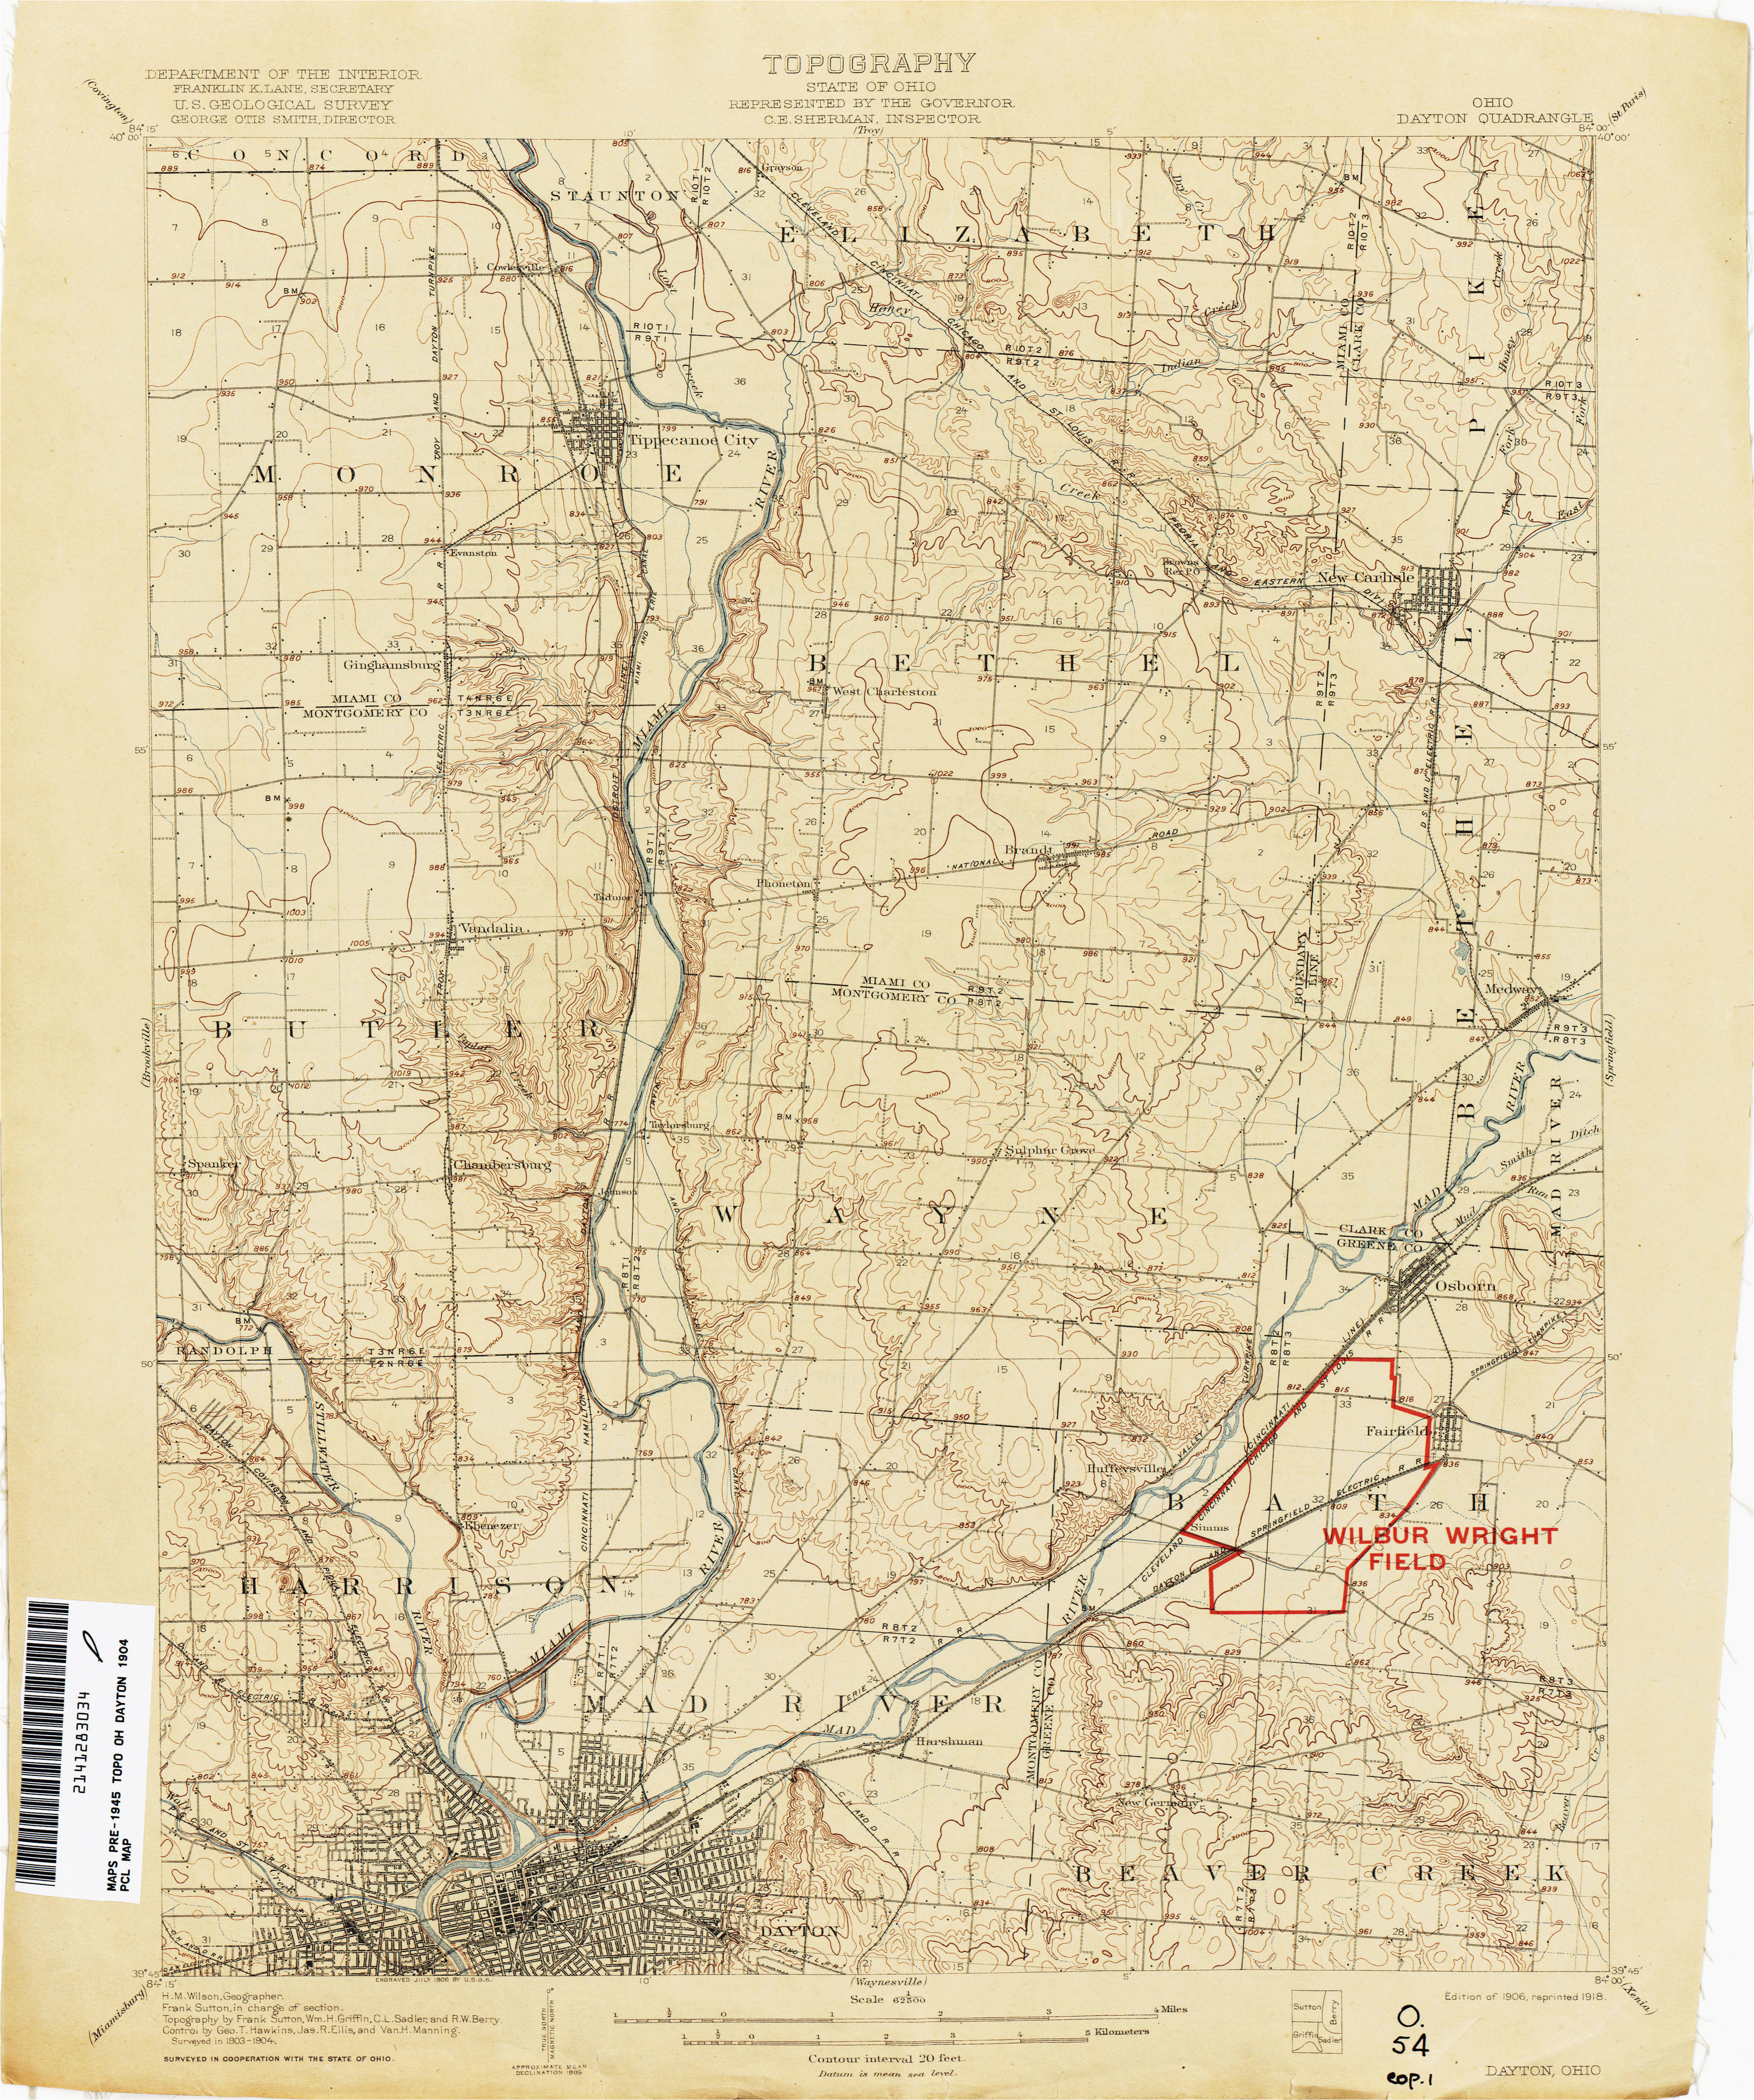 Jefferson County Ohio township Map Map Of Jefferson County Ohio Secretmuseum